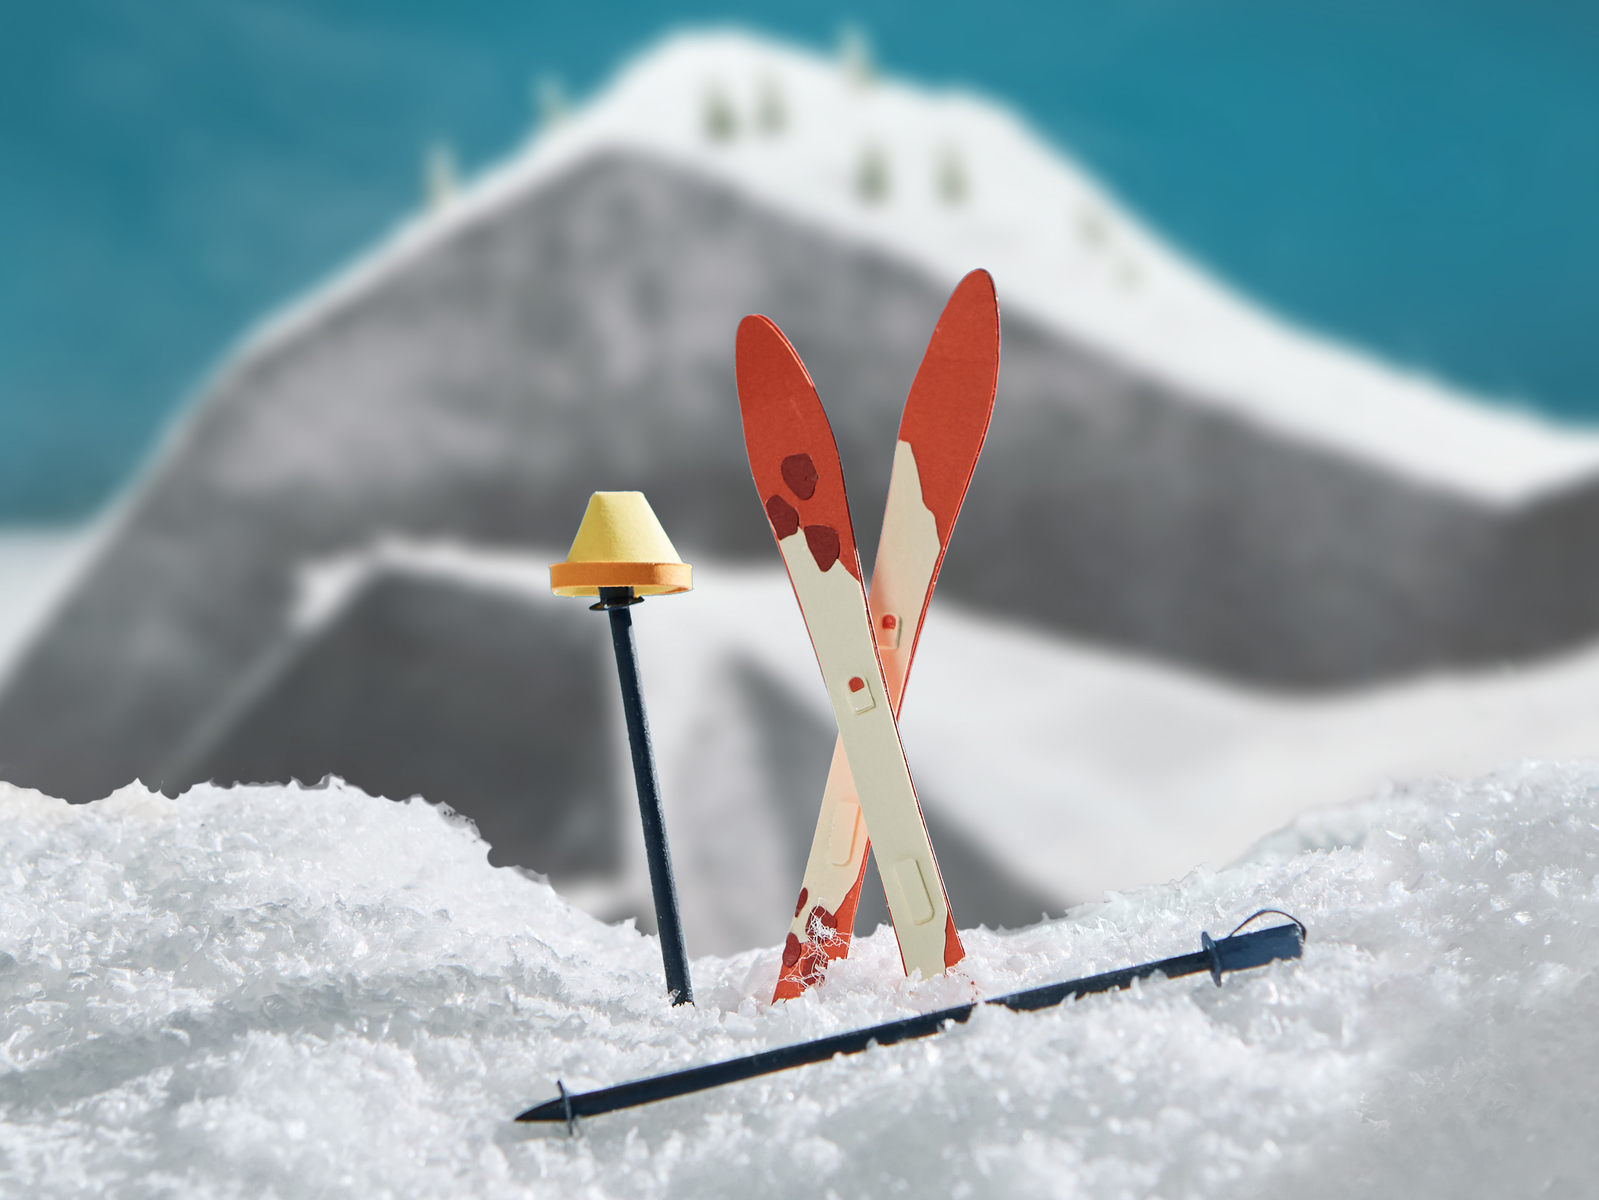 Cold лыжи. Лыжи креатив. Лыжи jpg. Горы лыжи еда 4000*3000. Картинка горы лыжи цветы торт.